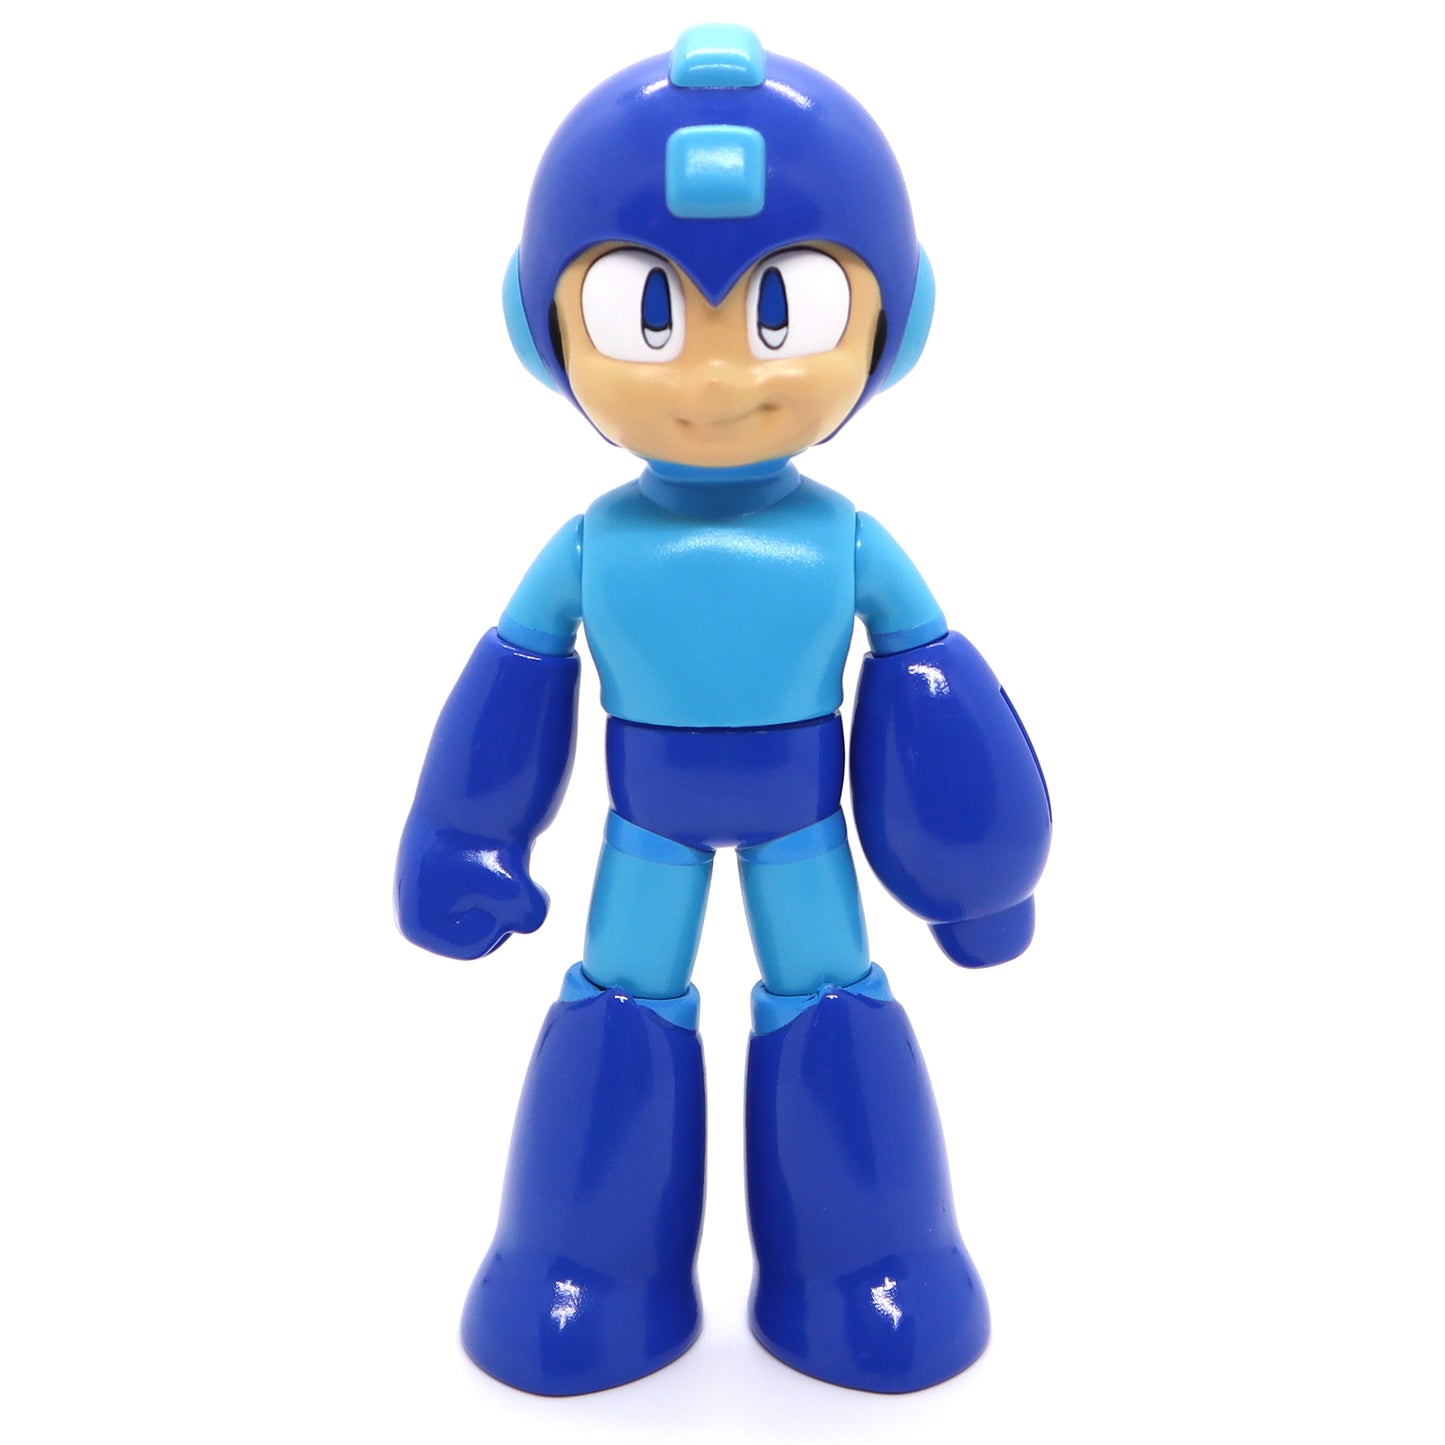 SOFVIPS "Mega Man" Mega Man